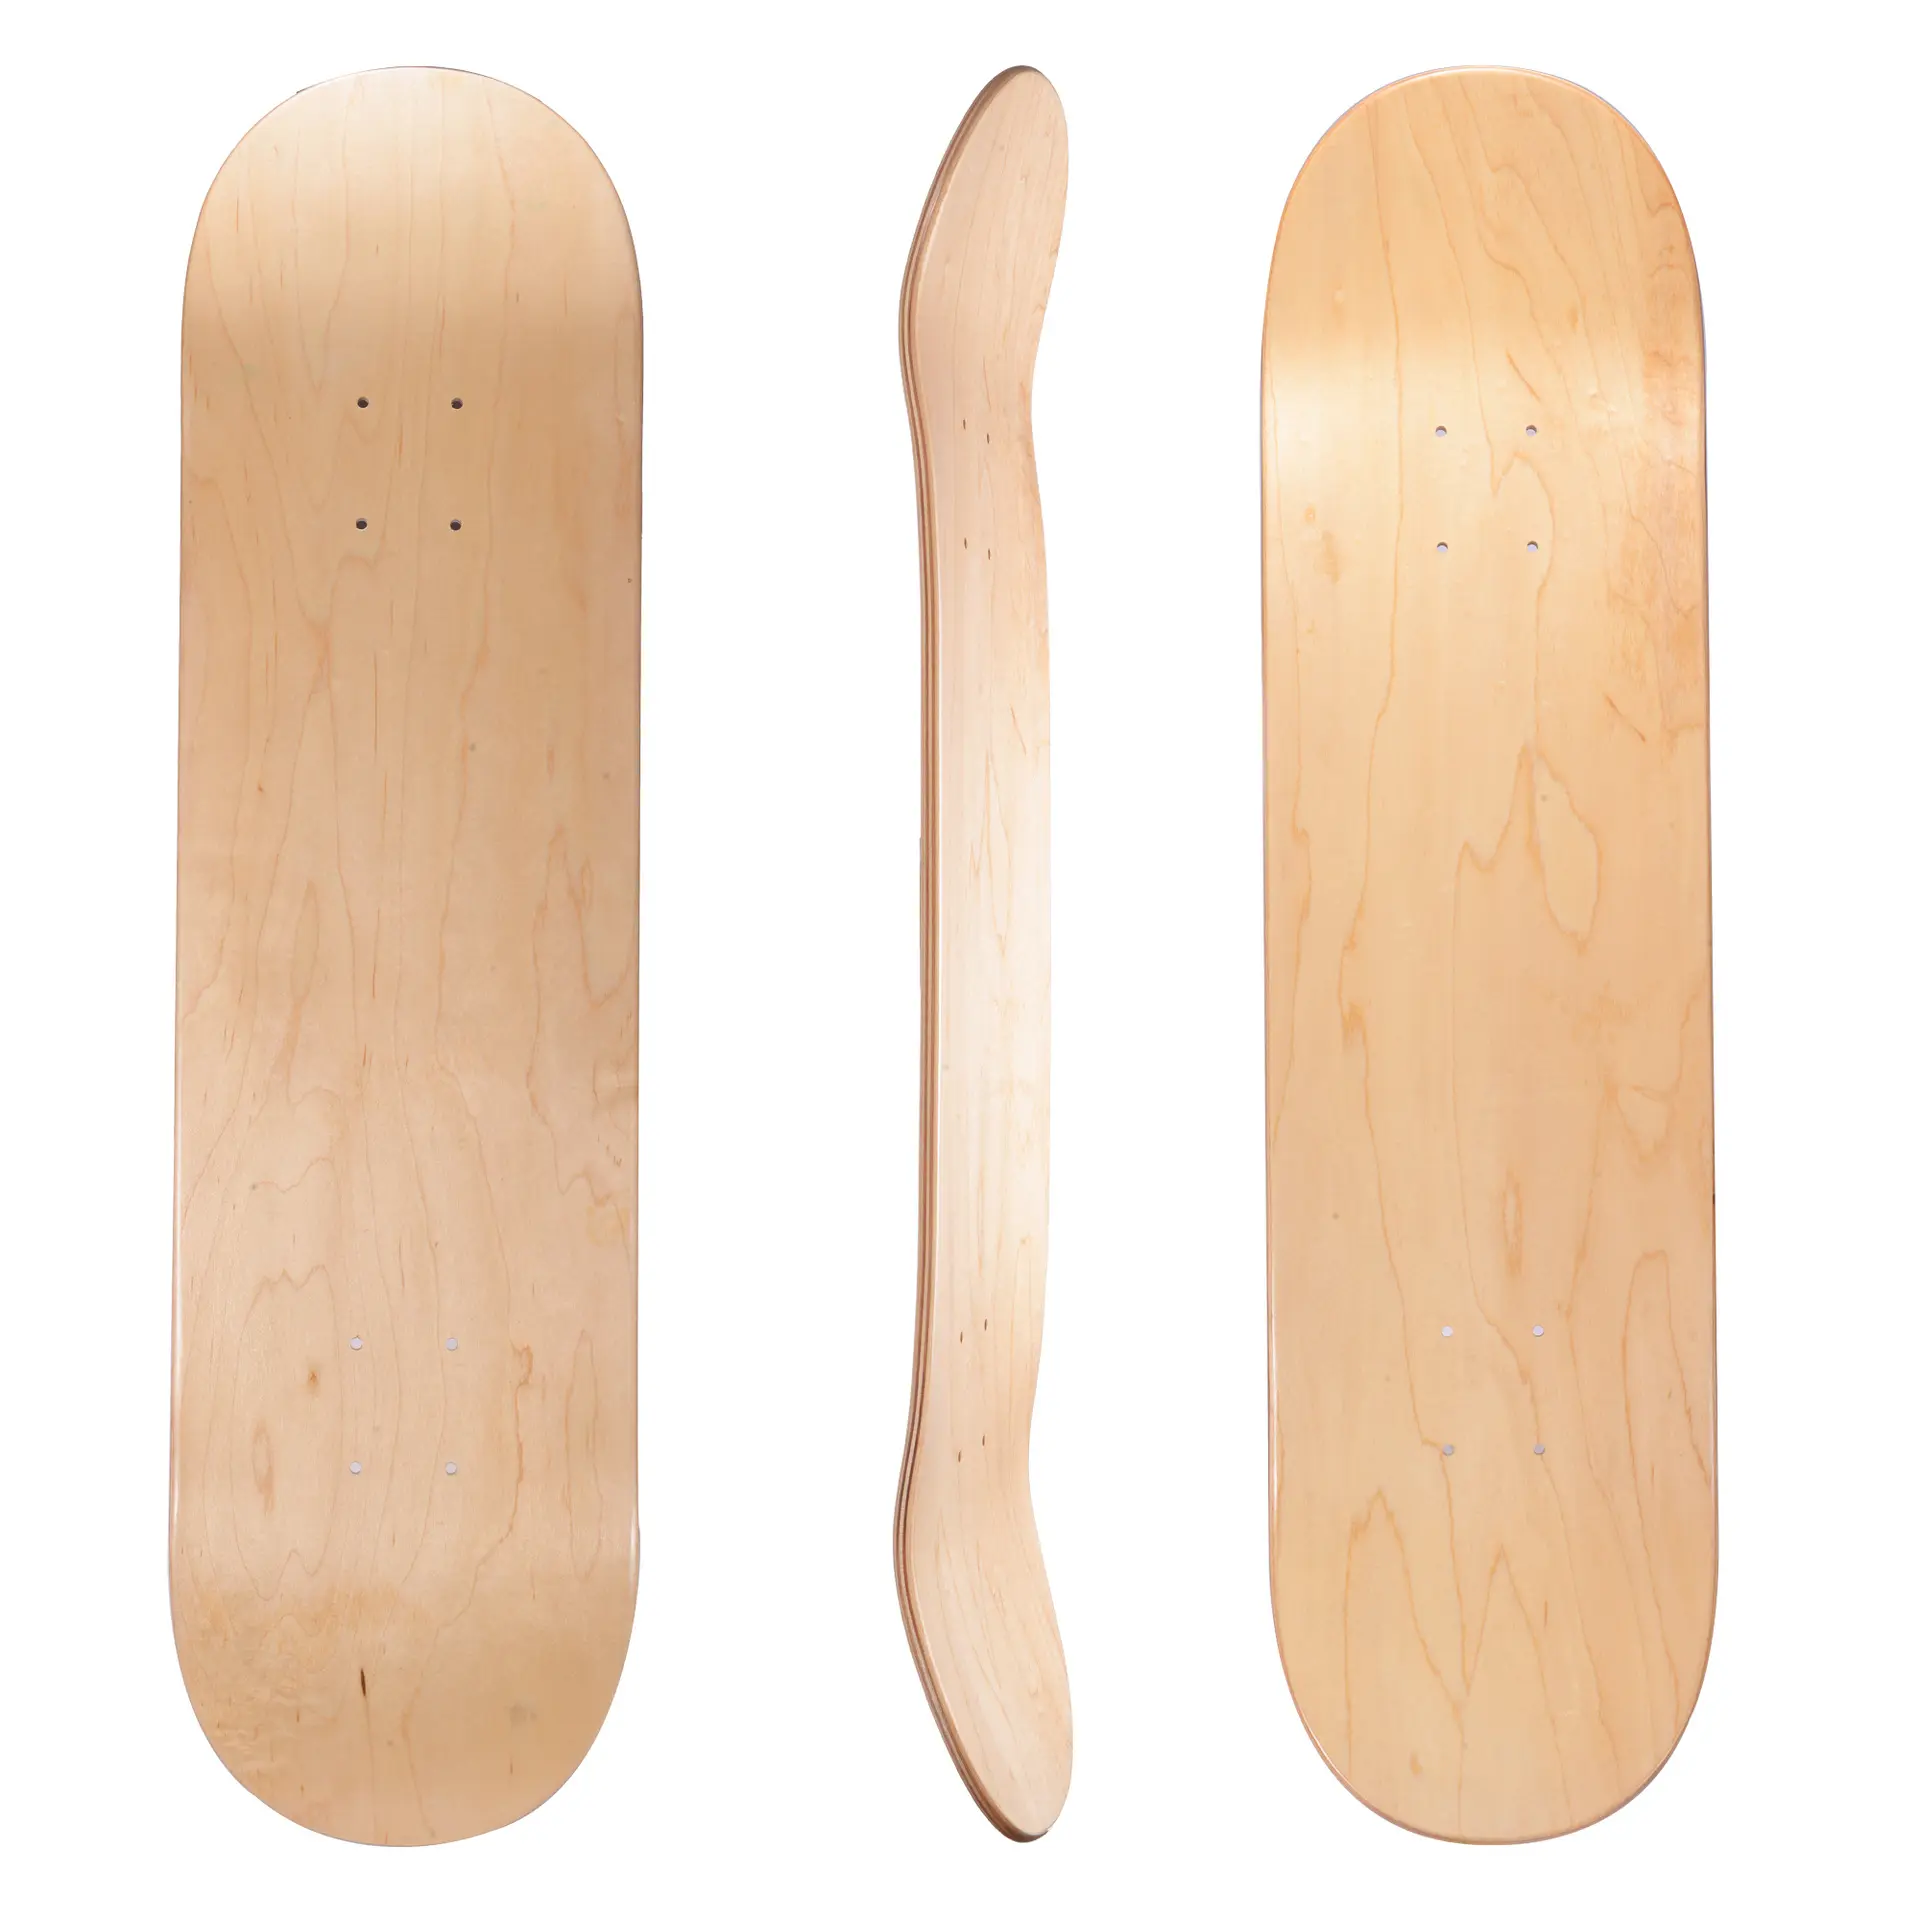 Chinese maple wood blank skateboard deck